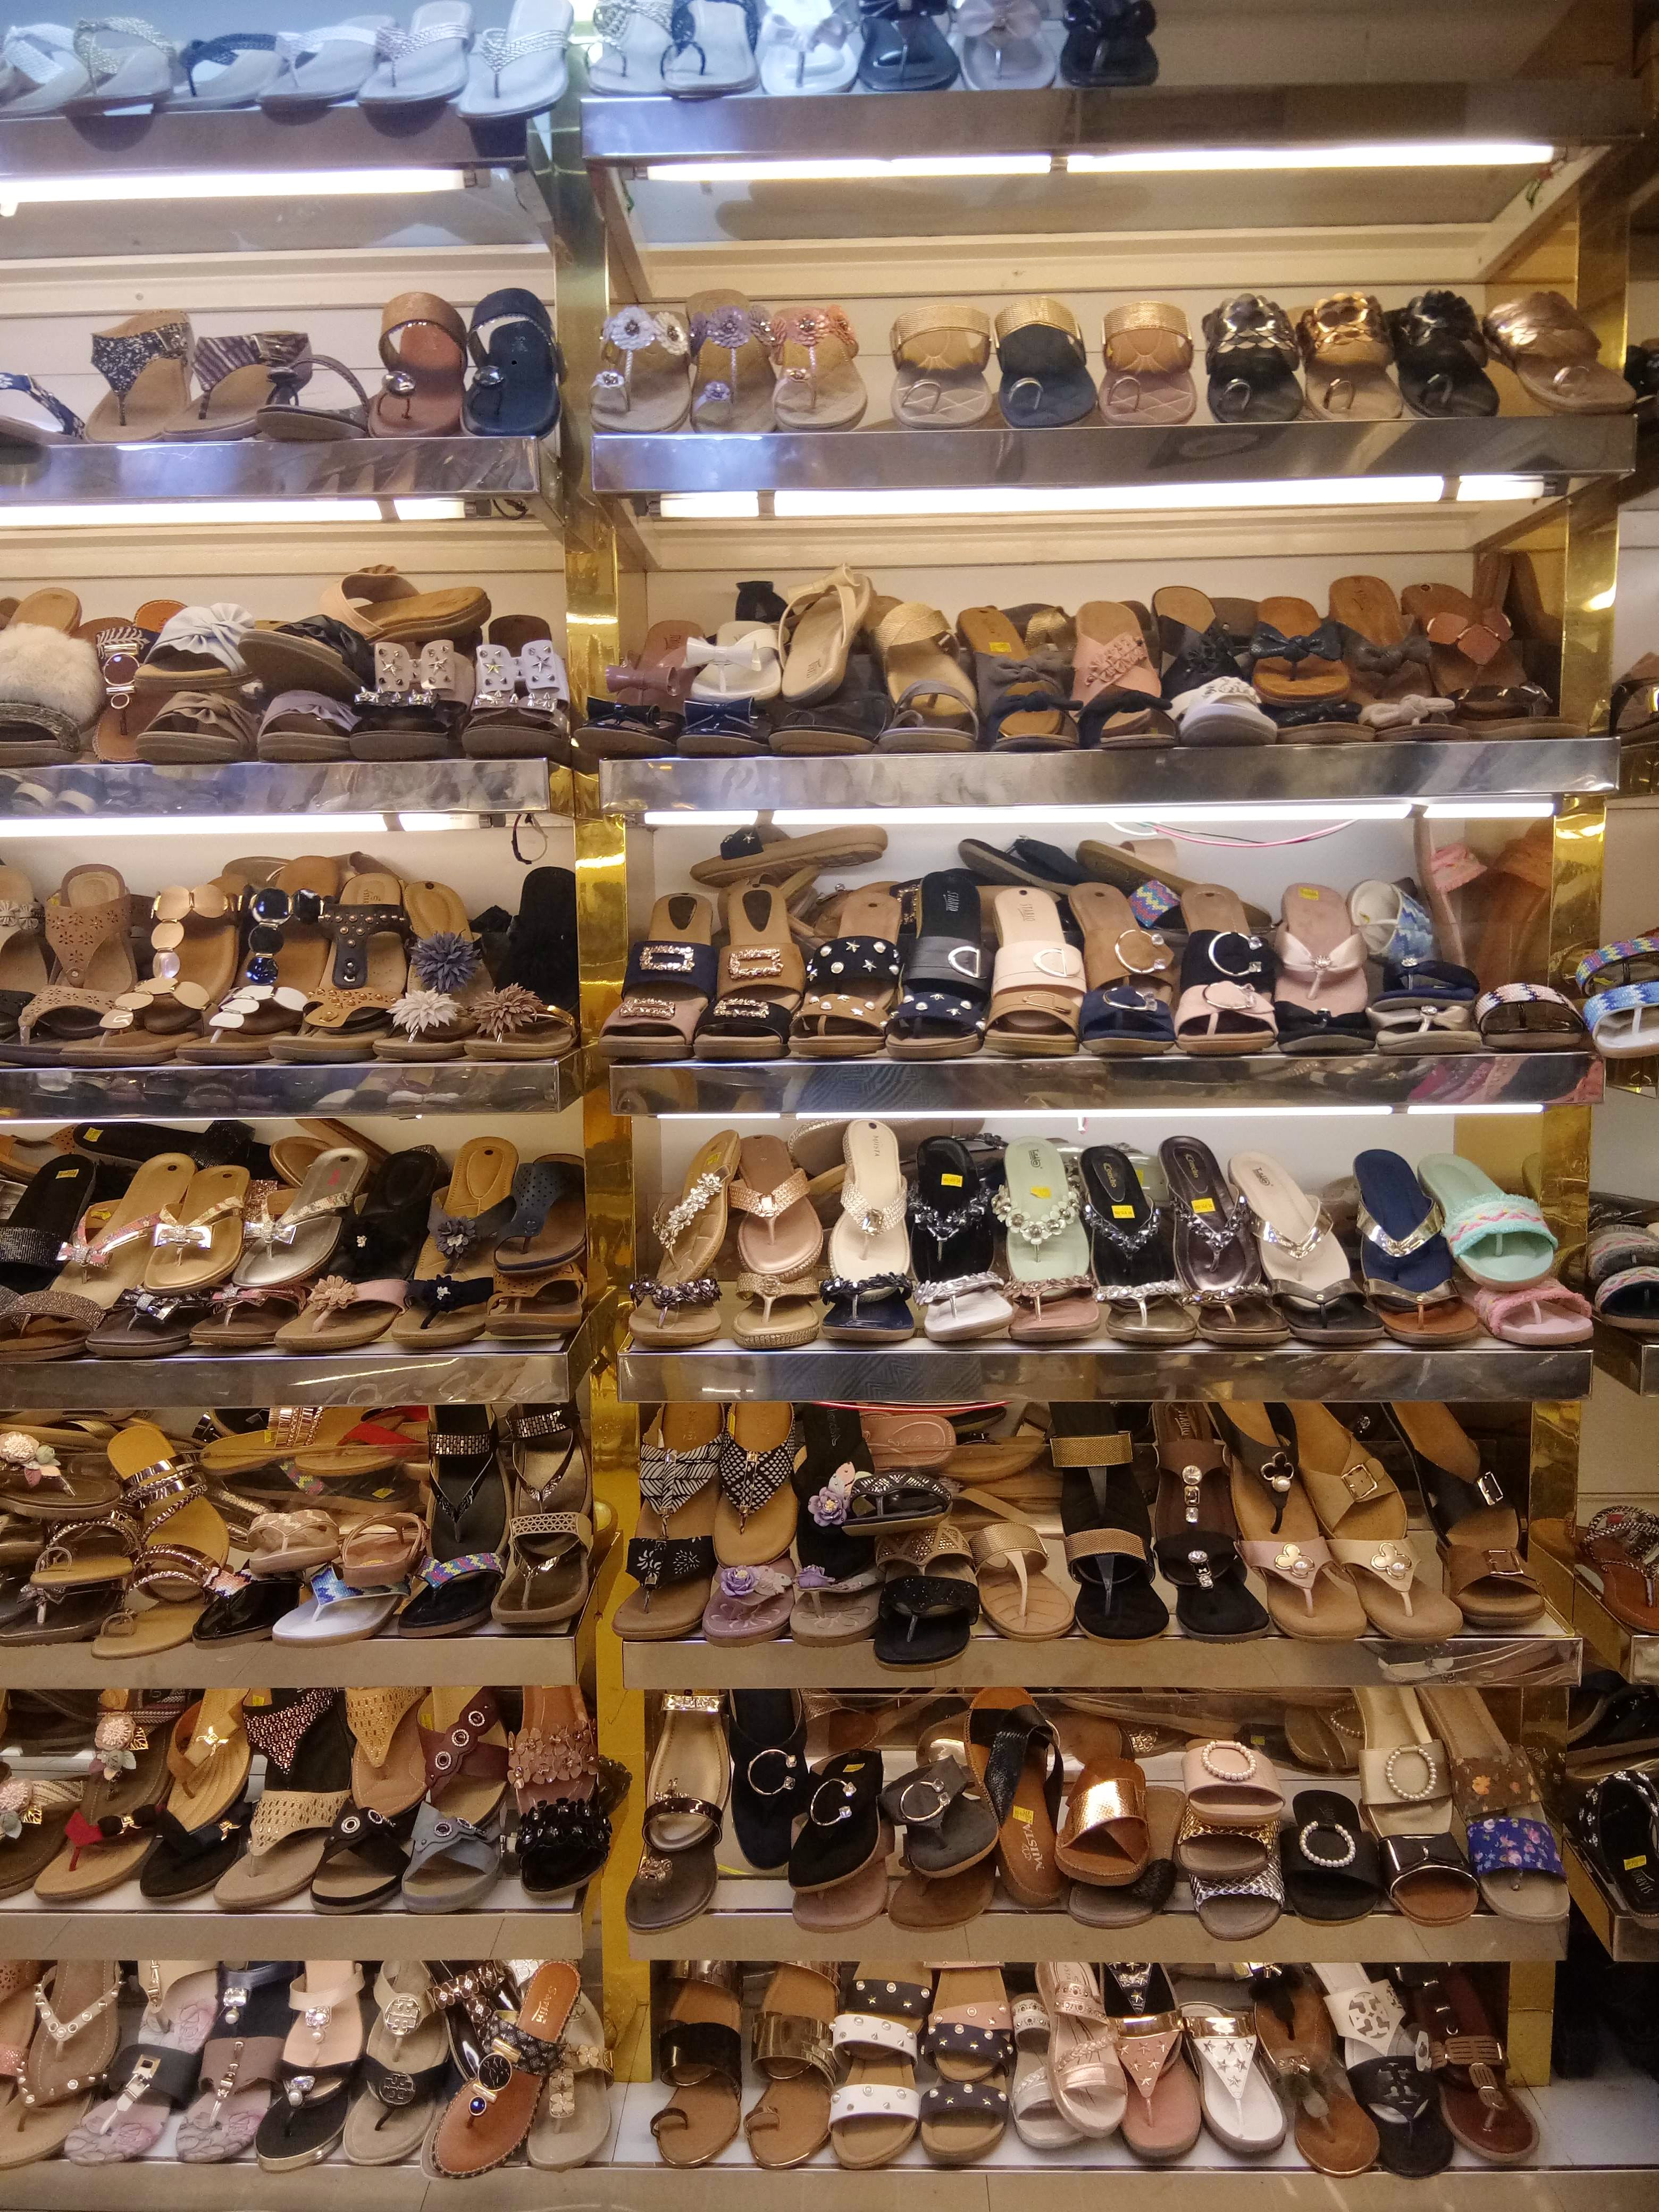 Footwear,Collection,Inventory,Shoe,Shoe store,Firearm